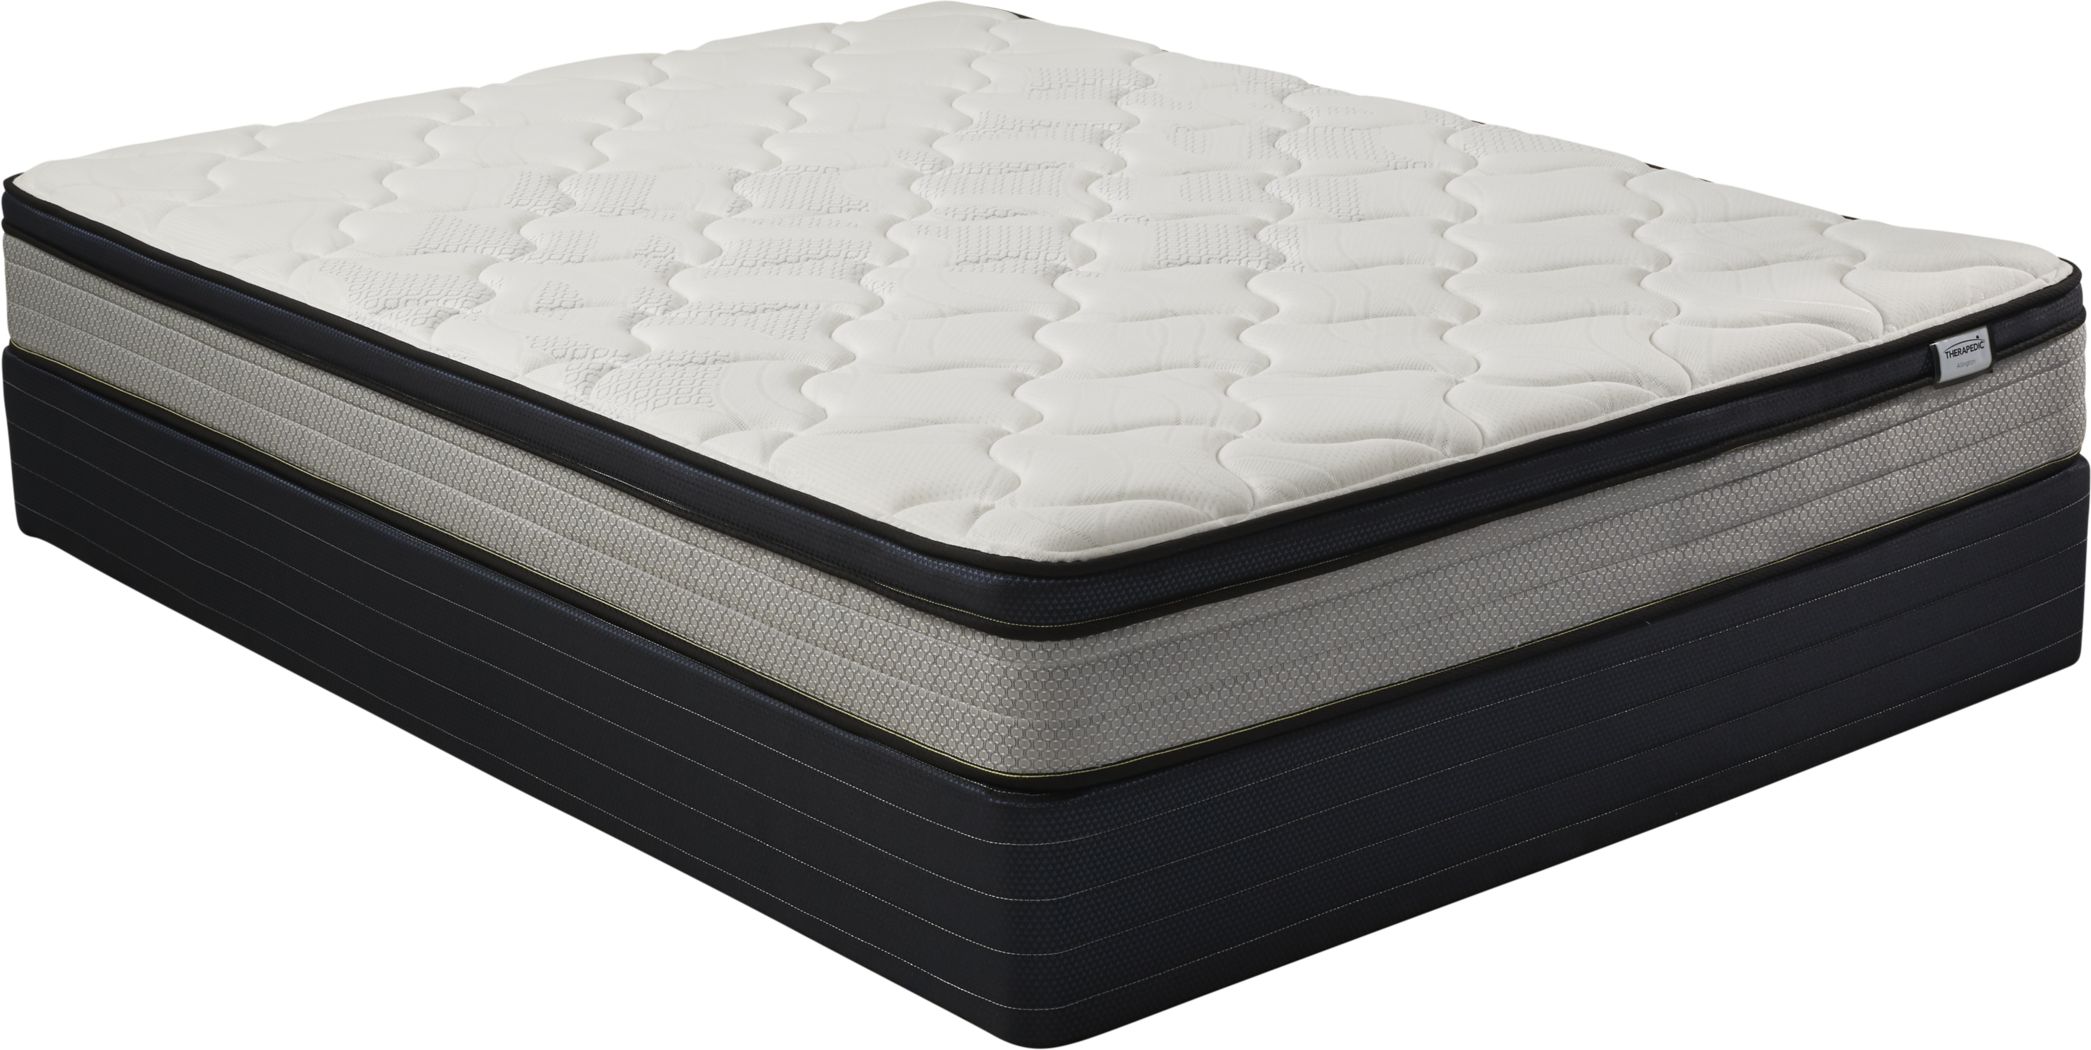 affordable mattress near me